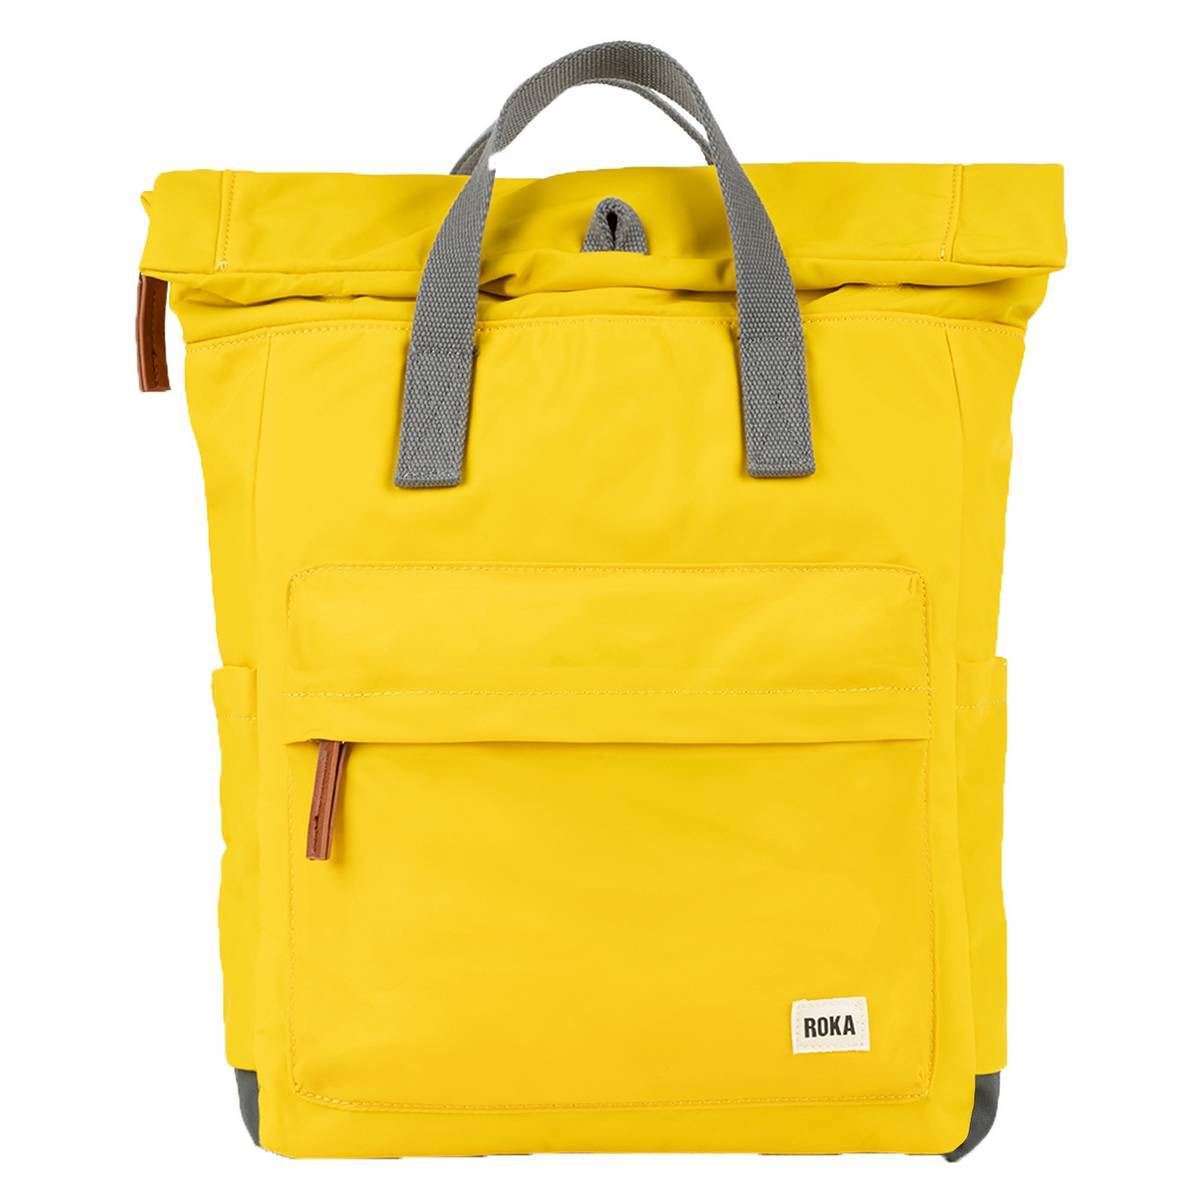 Roka Canfield B Medium Sustainable Nylon Backpack - Mustard Yellow